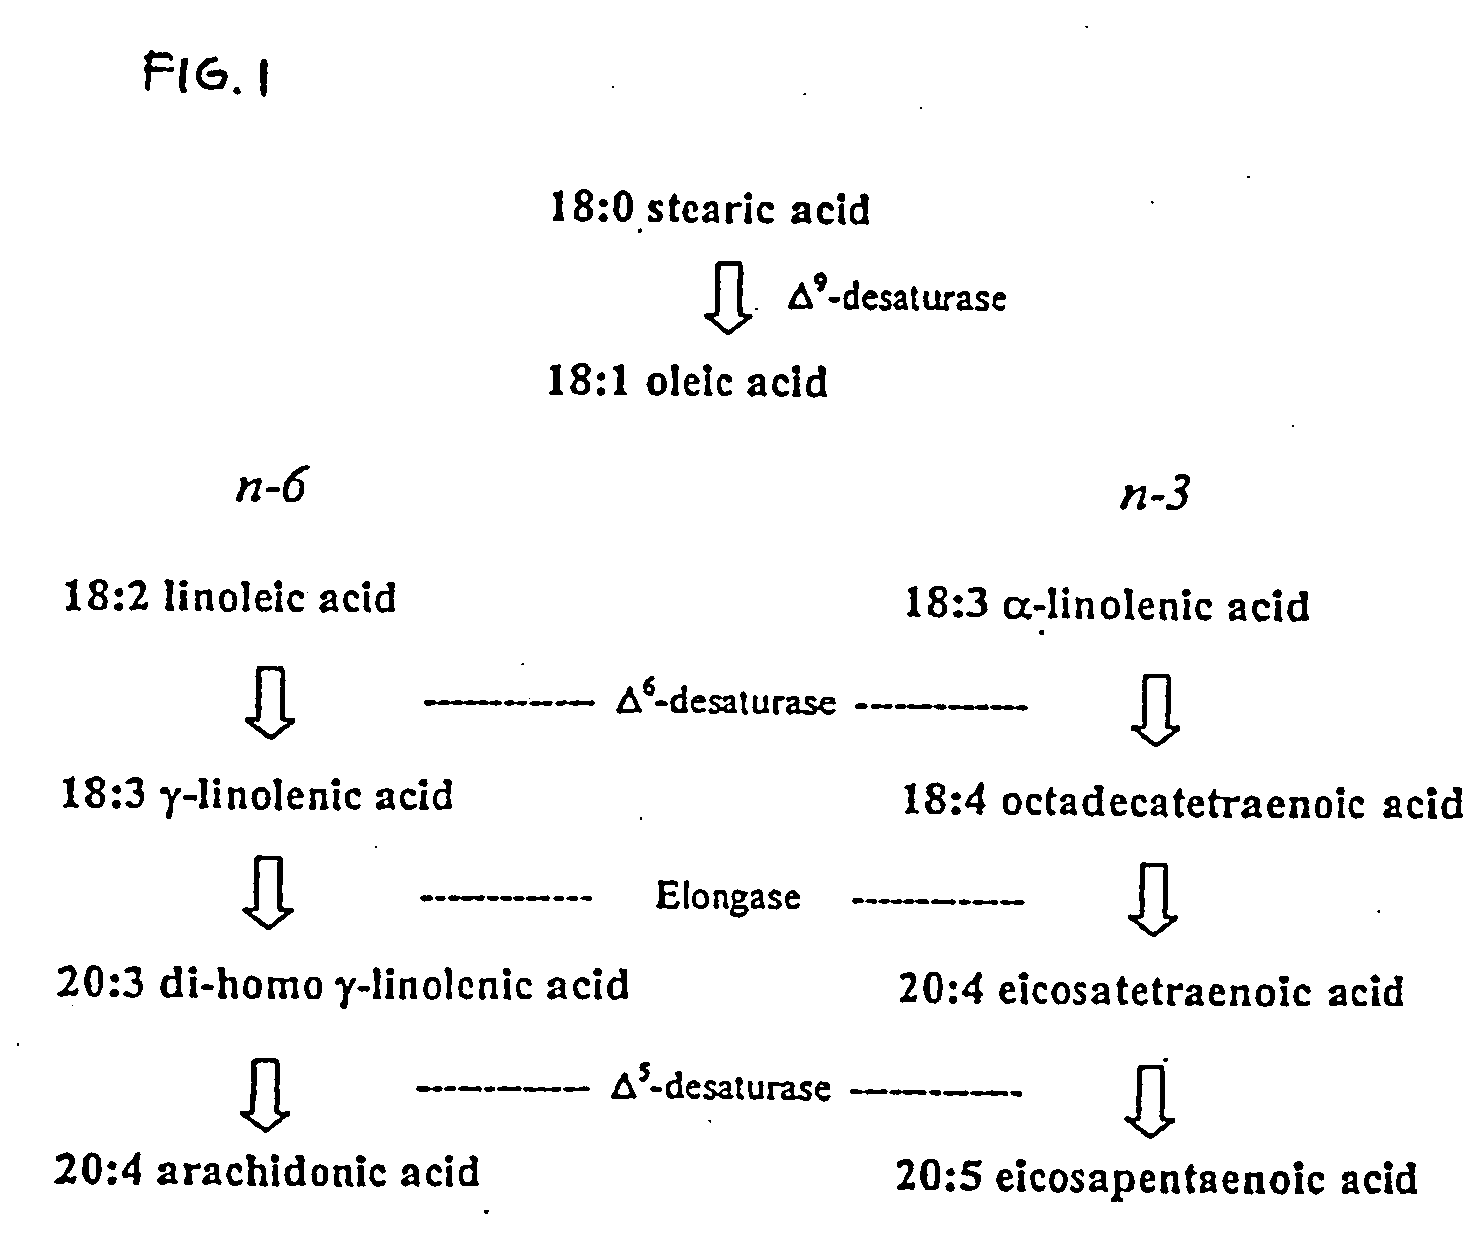 Method for producing arachidonic acid in transgenic organisms